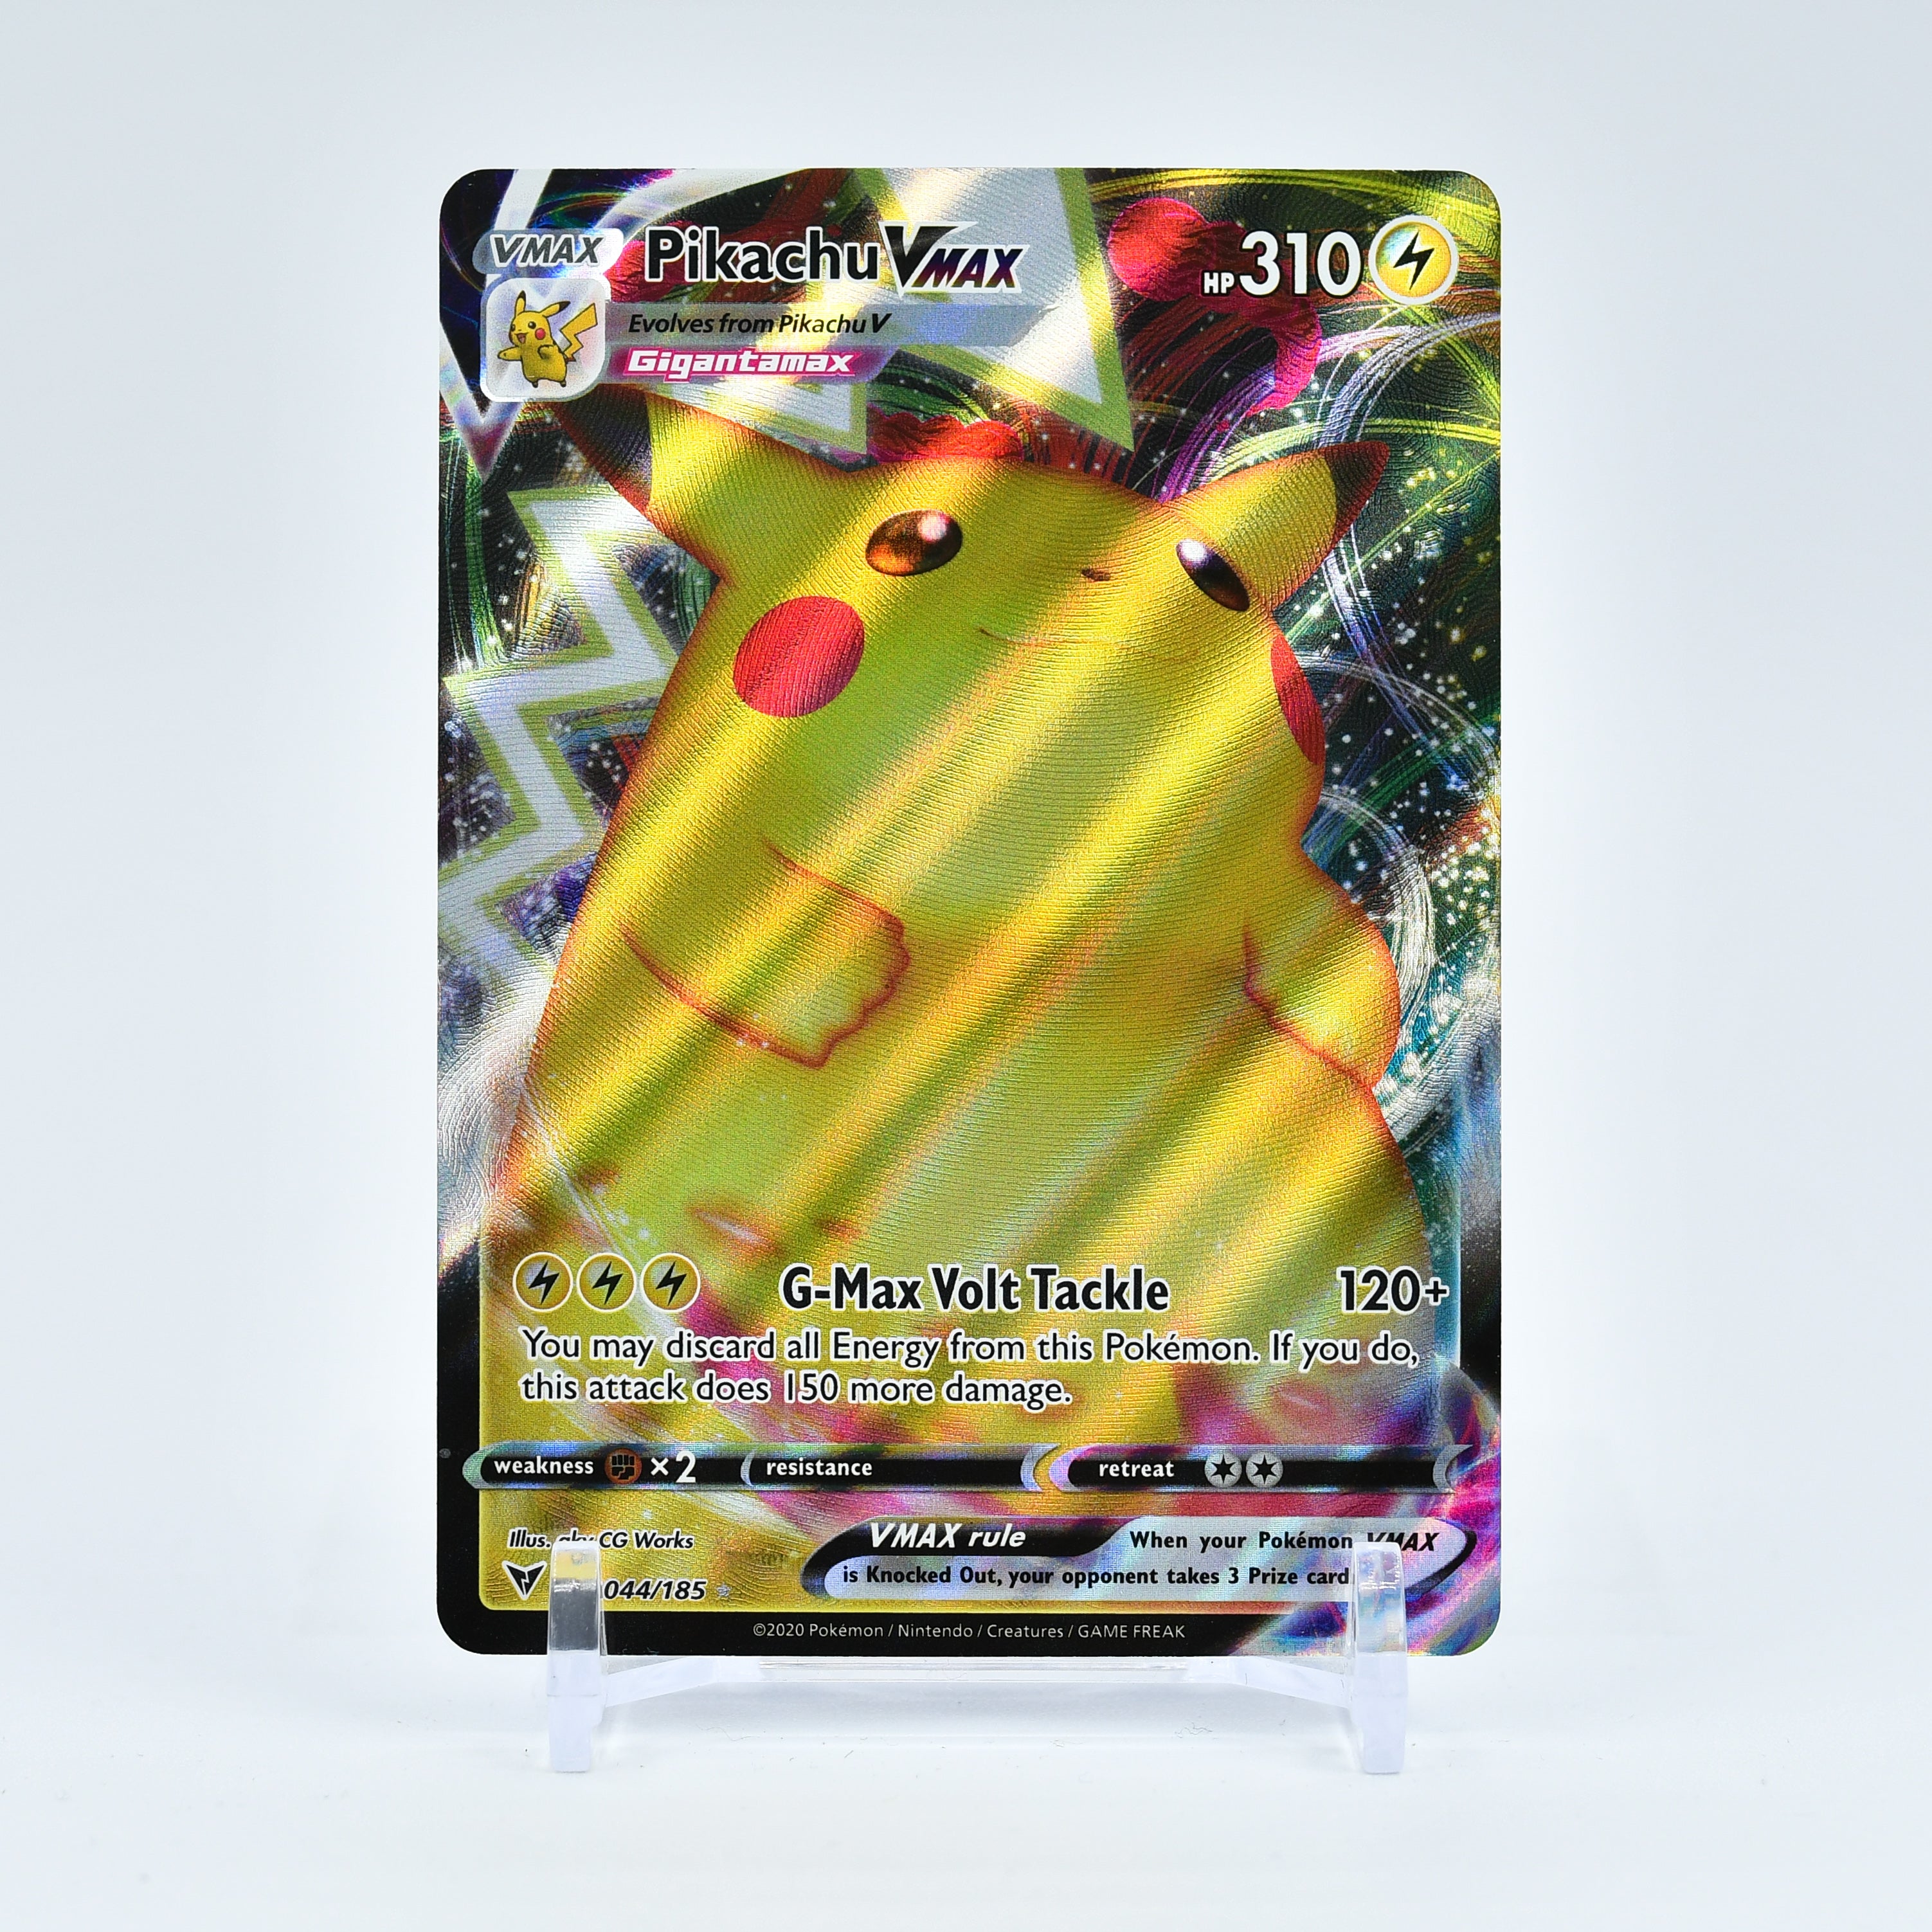 Genesect V - 185/264 Fusion Strike Ultra Rare Pokemon - NM/MINT – The  PokéTrade Emporium